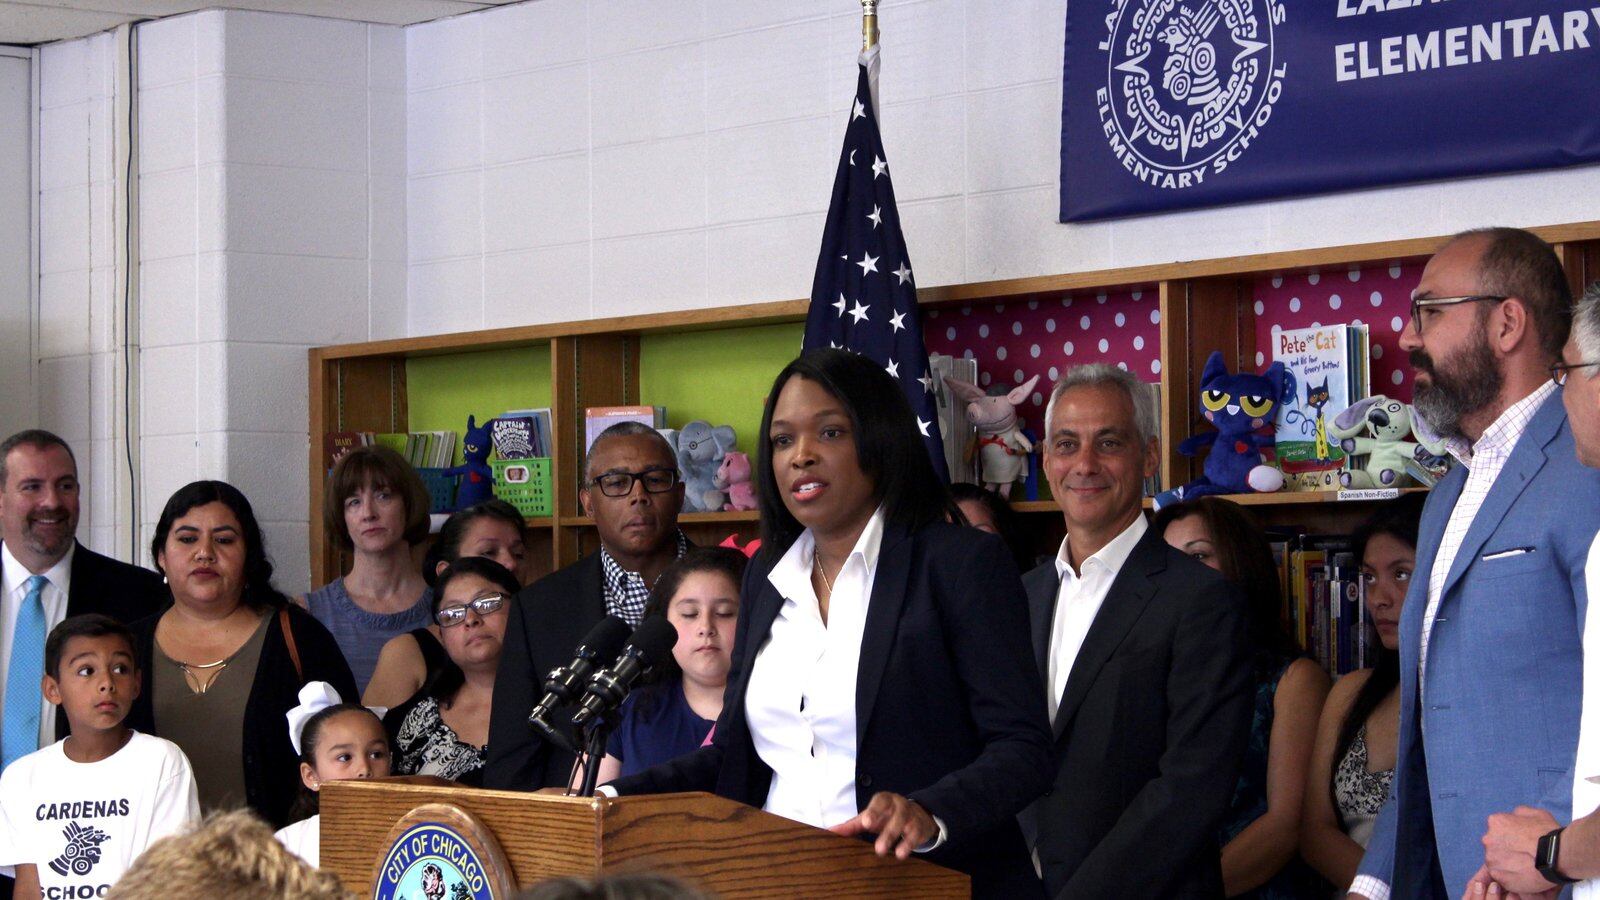 Chicago Public Schools CEO Janice Jackson announced the district's $1 billion capital plan at Lázaro Cardenas Elementary School in Little Village.